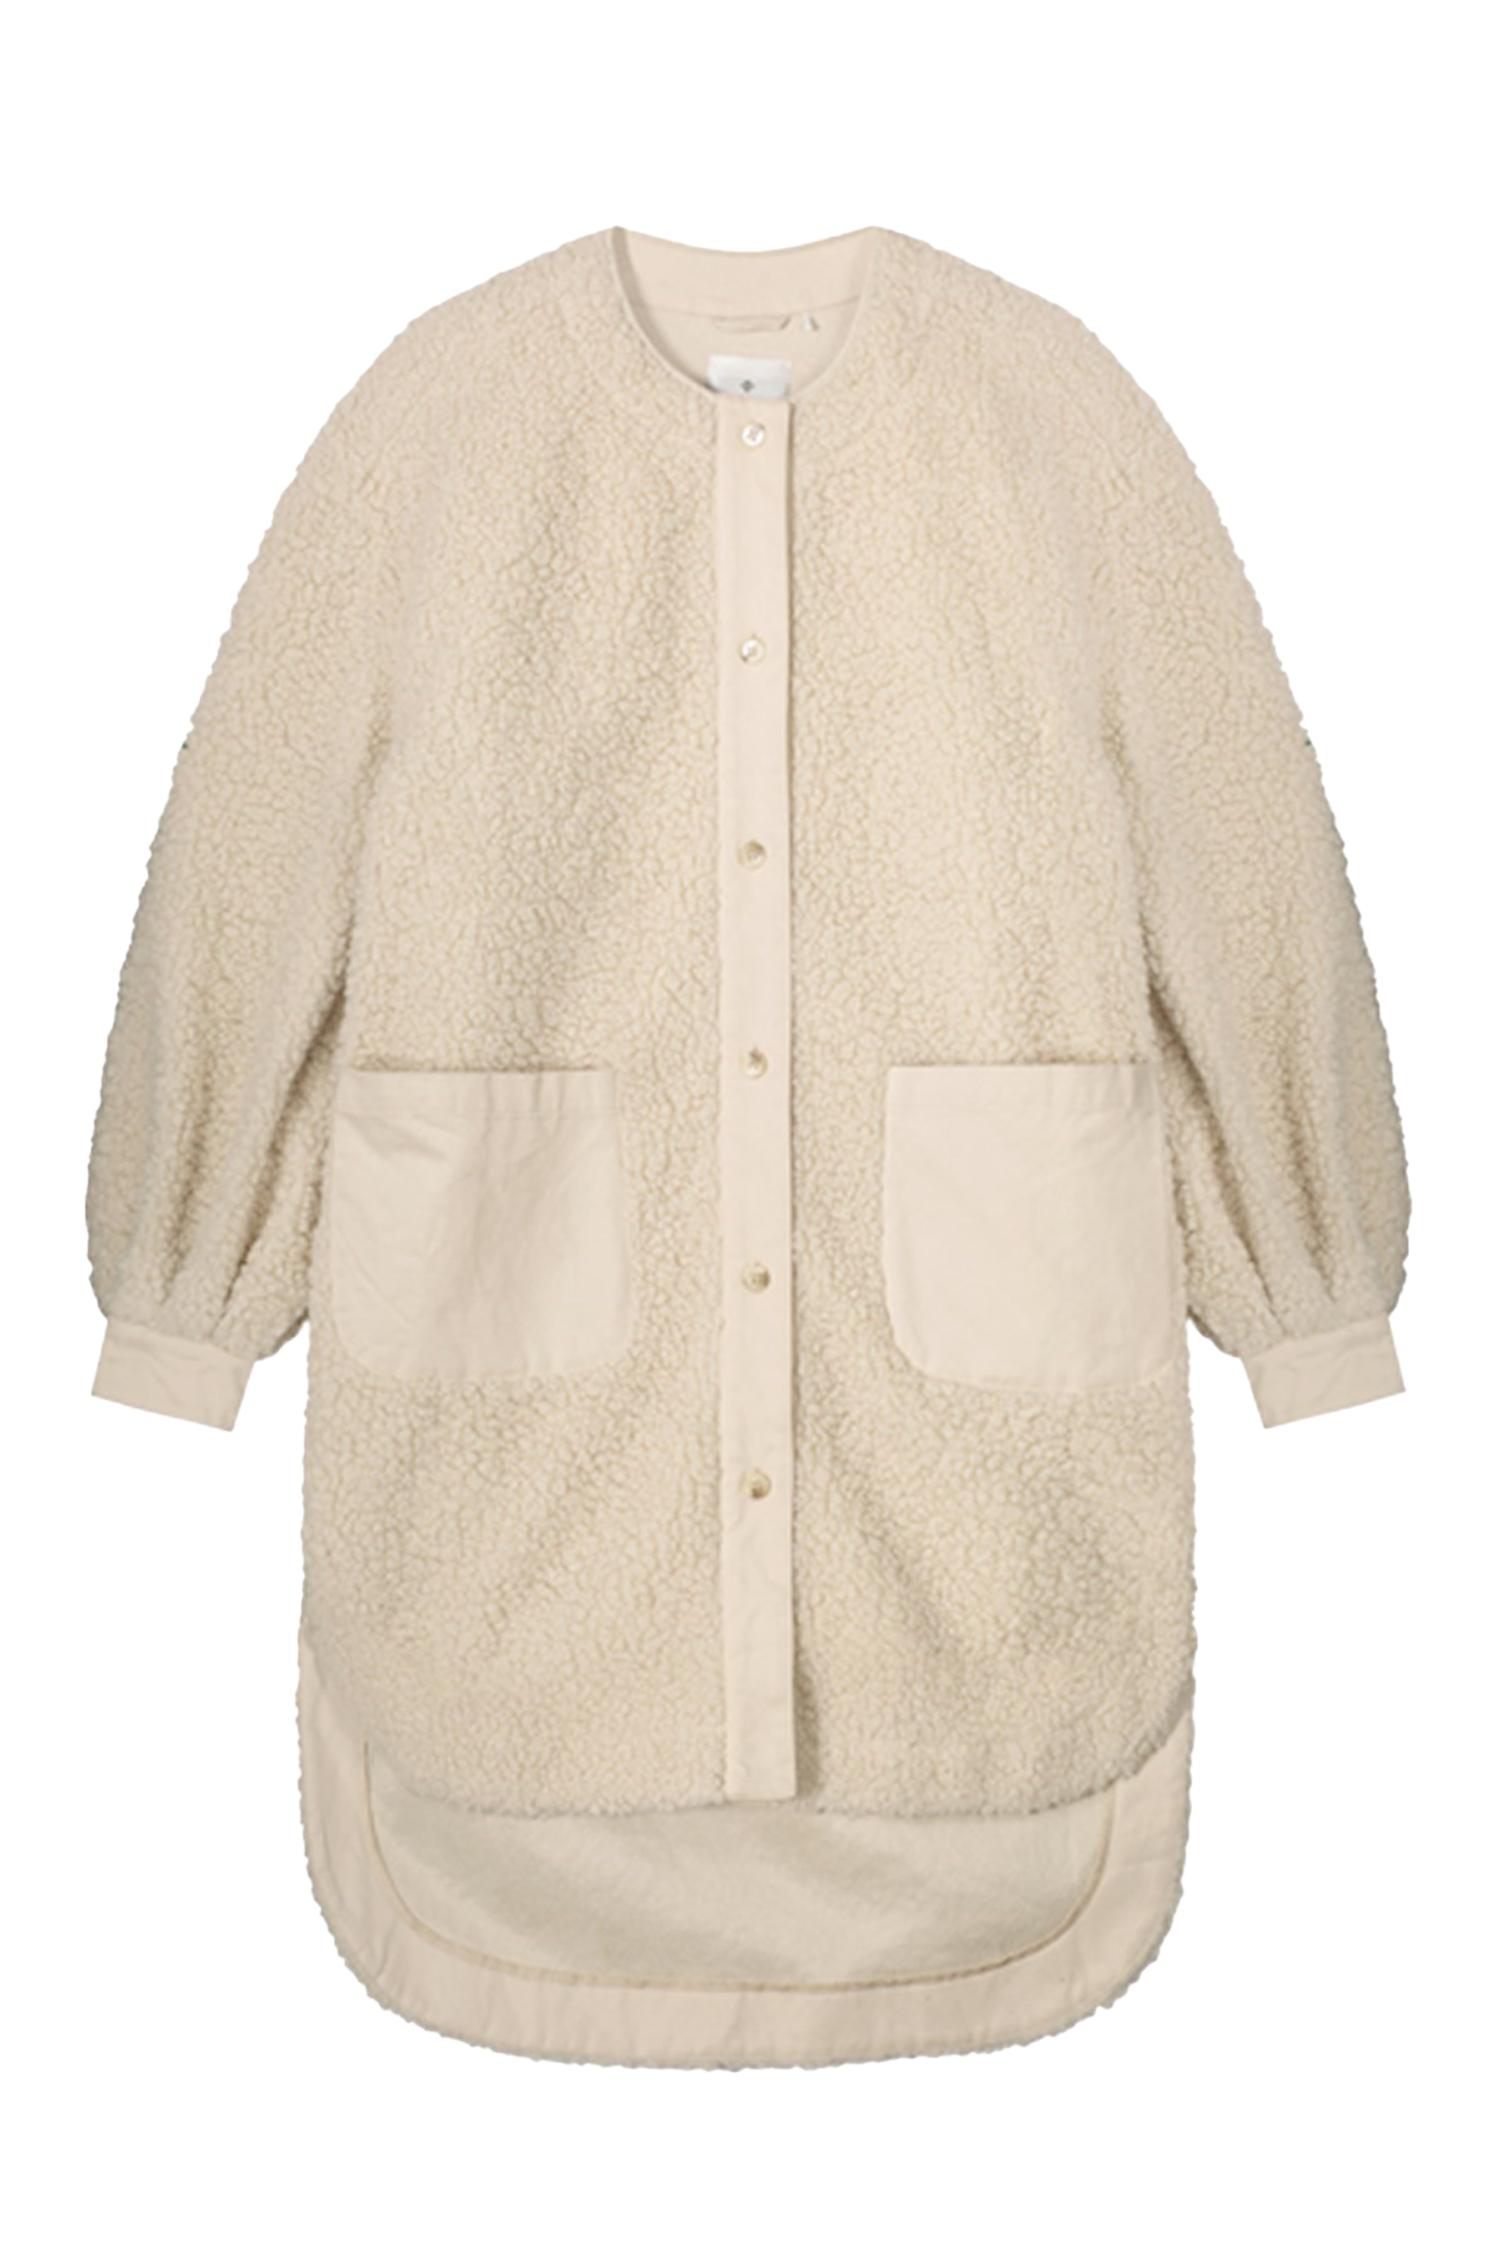 Summum 1s1133-11900 jacket teddy